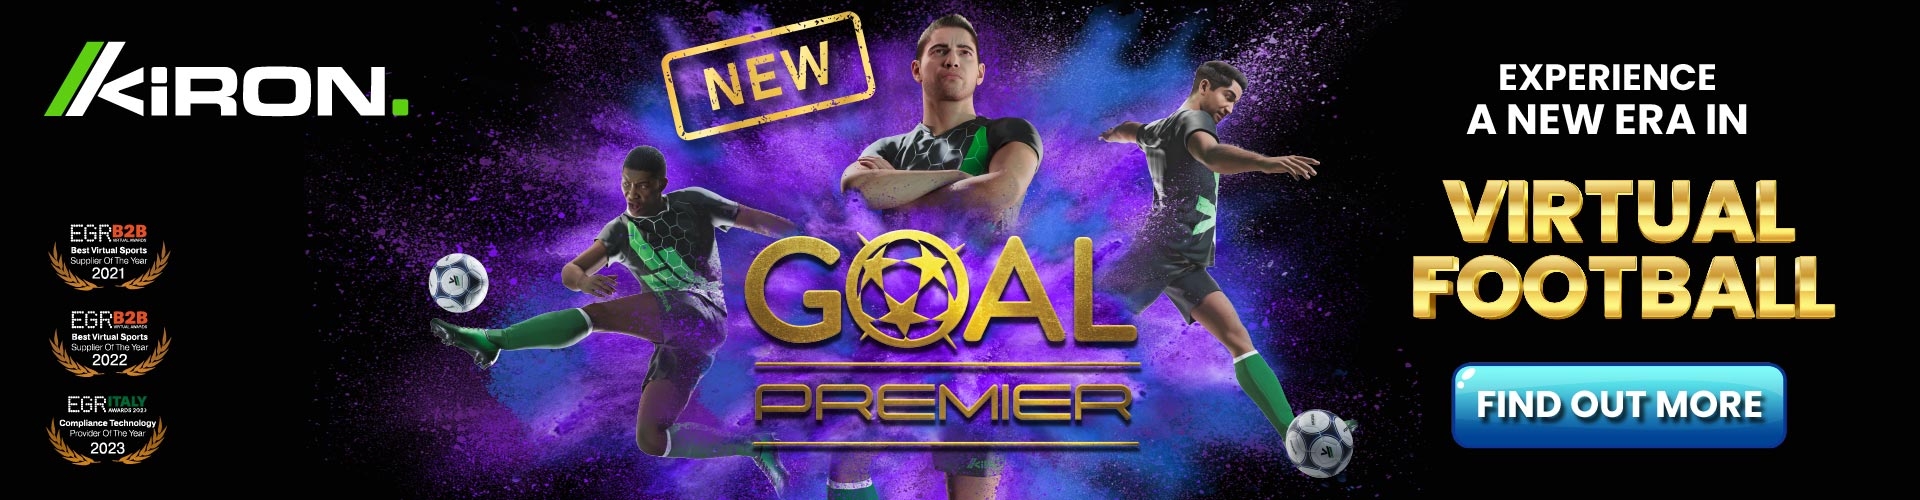 Goal-Premier_Kiron-Website_1920x500px-01